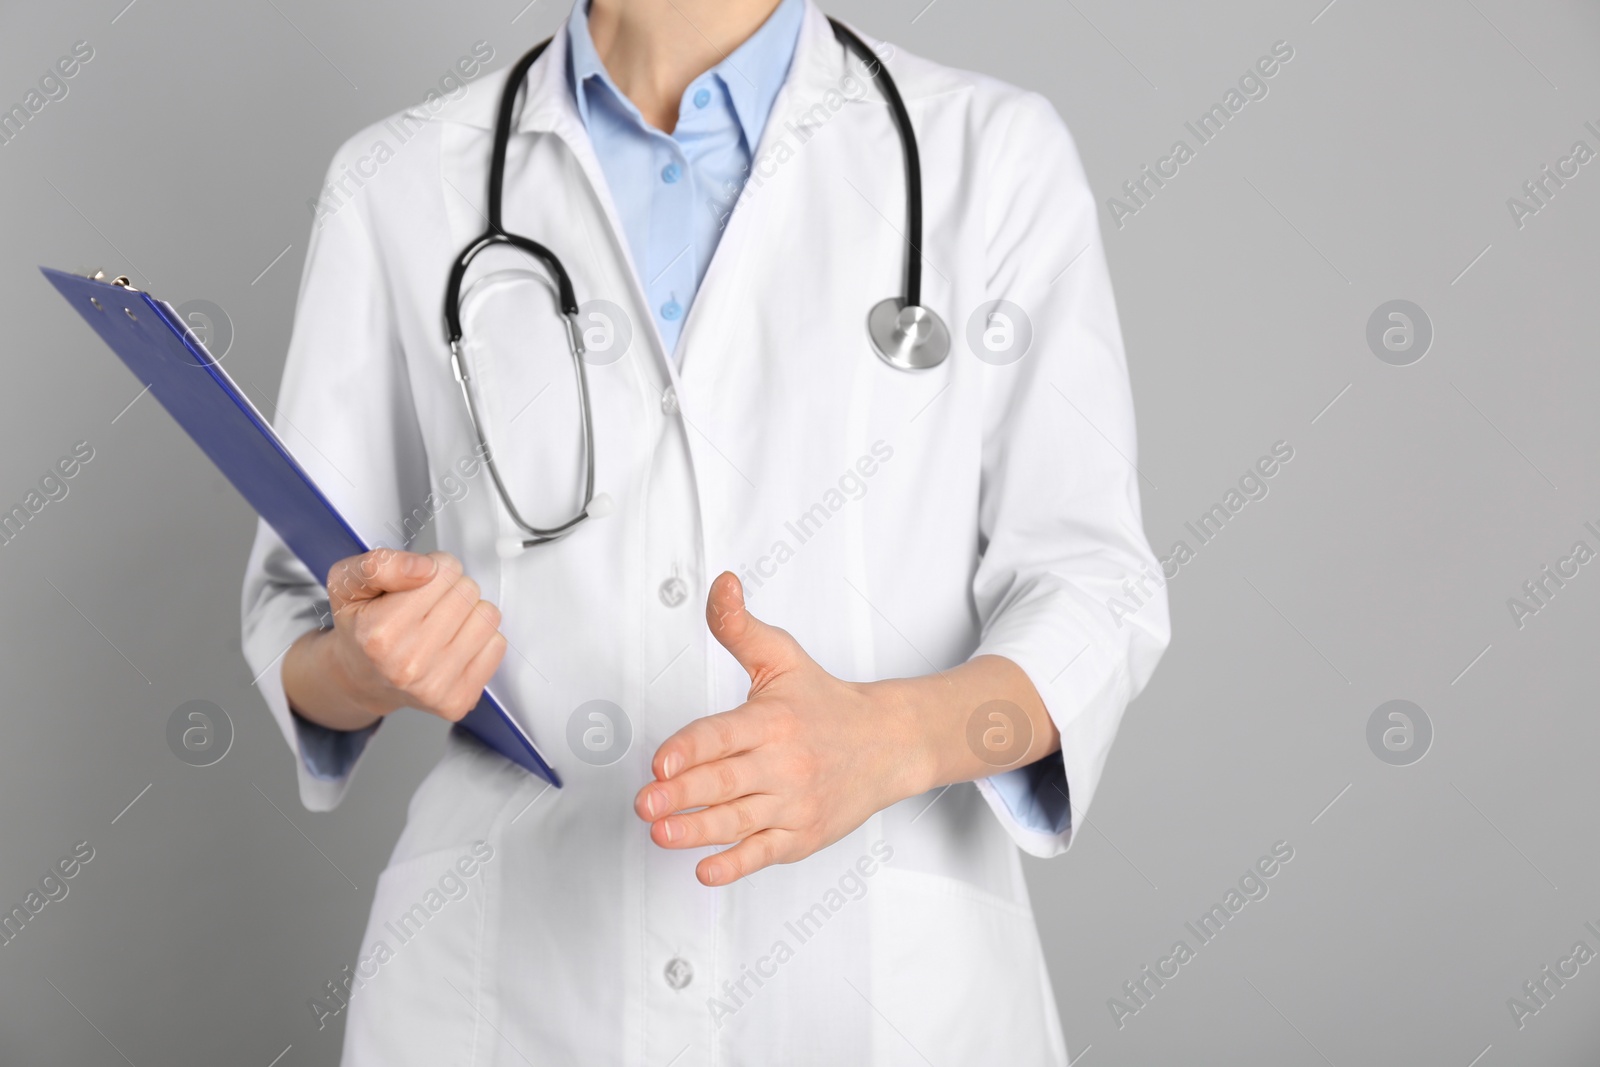 Photo of Doctor offering handshake on light grey background, closeup